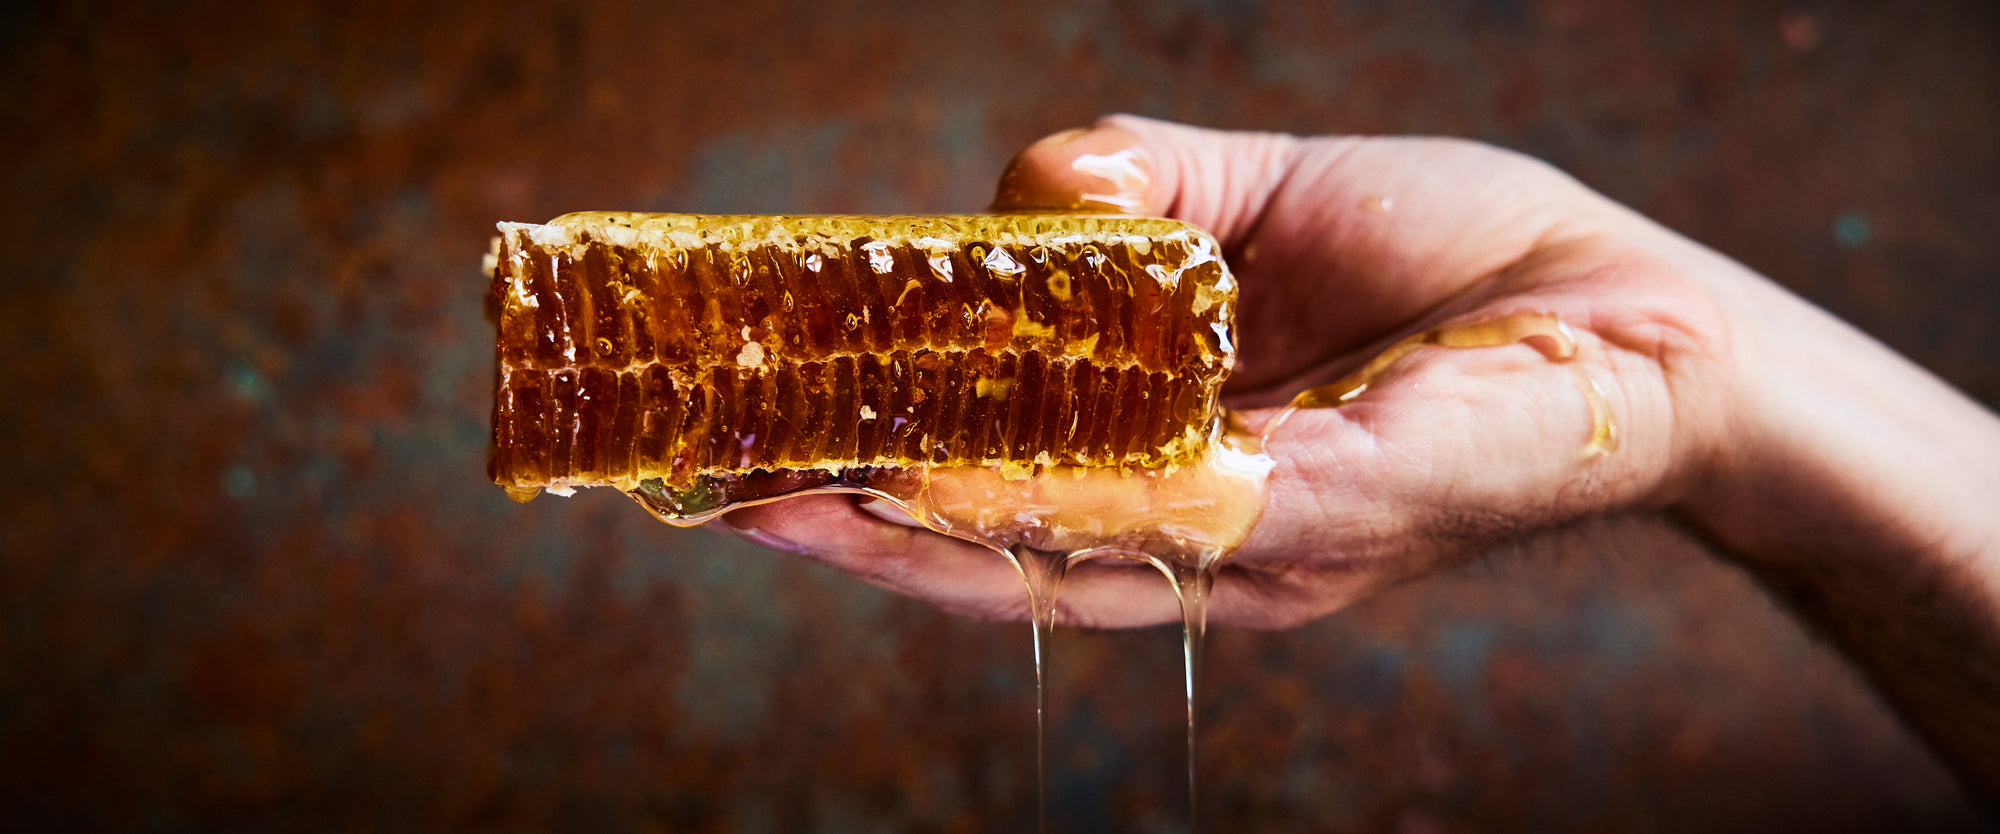 Honeycomb — London Honey Co.